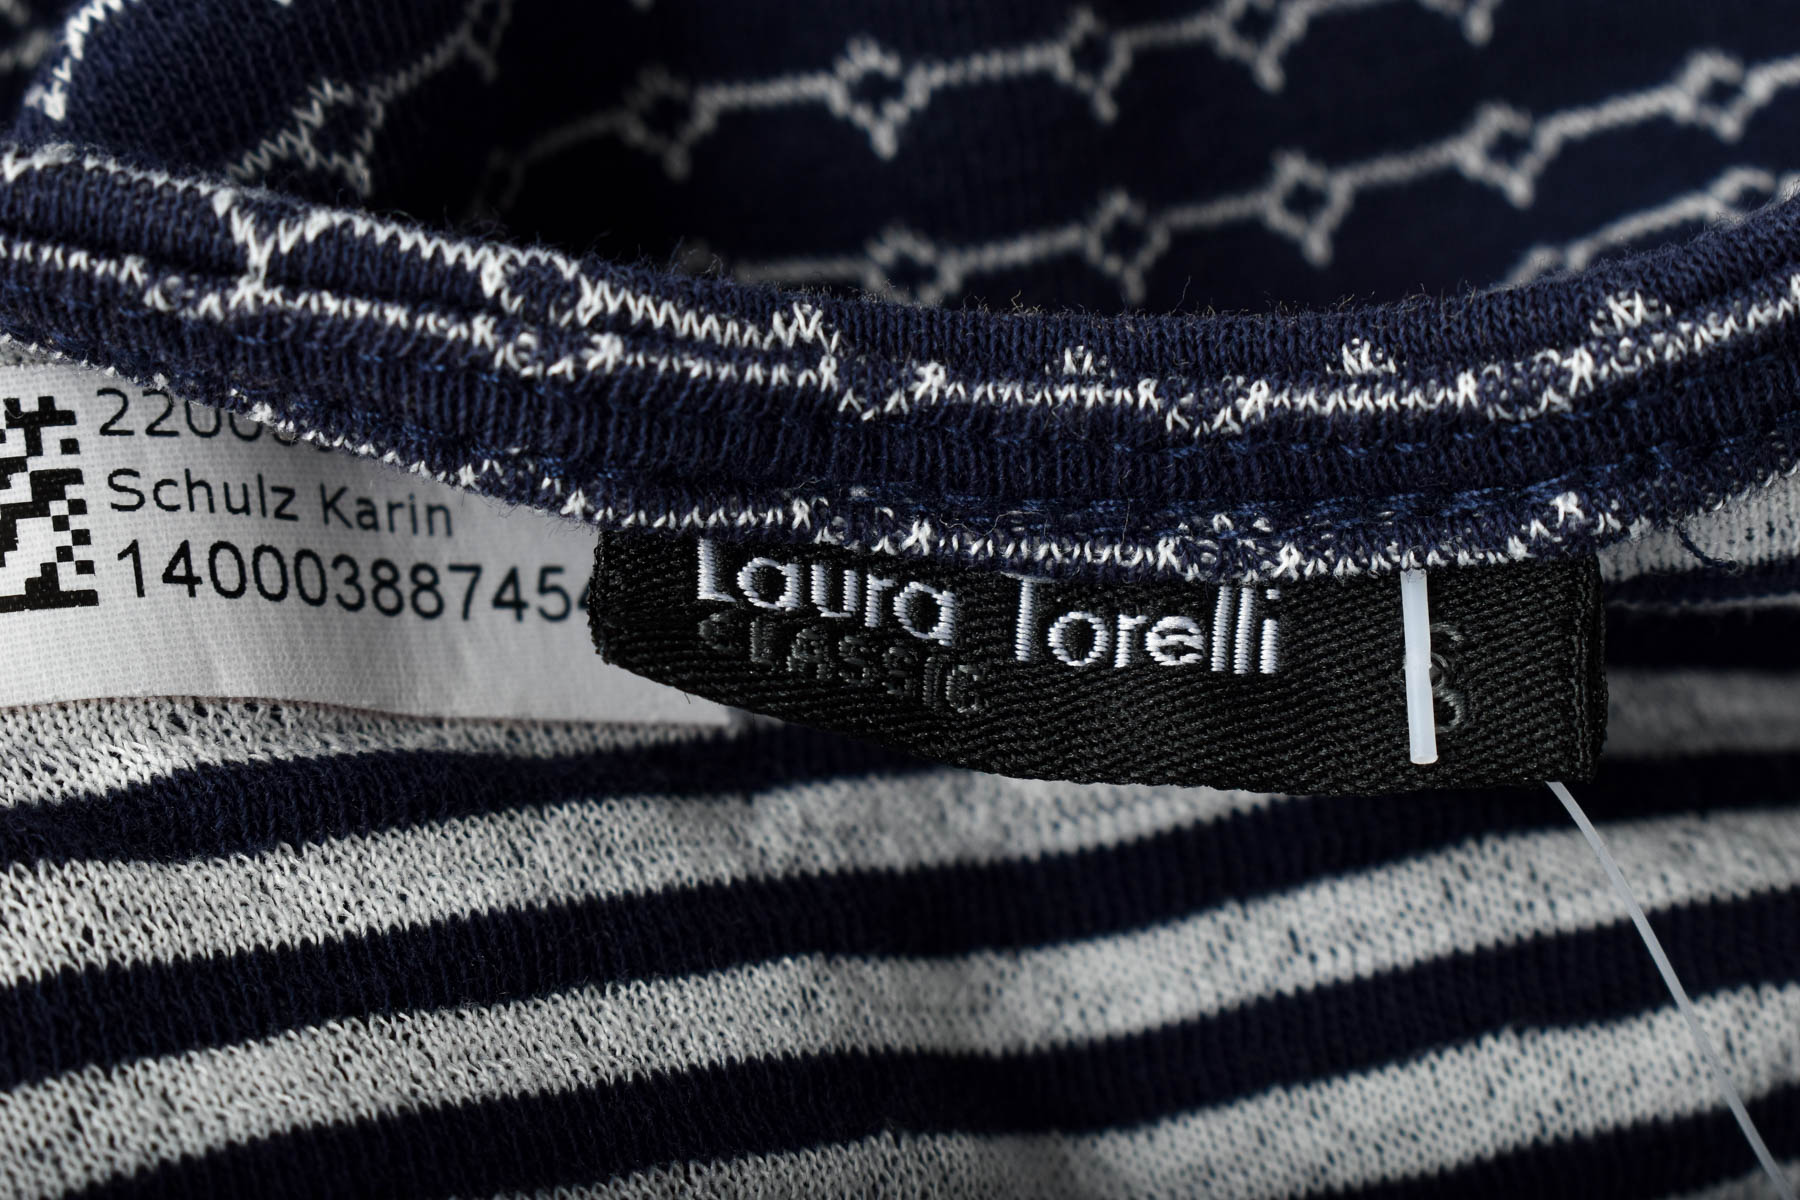 Women's sweater - Laura Torelli - 2